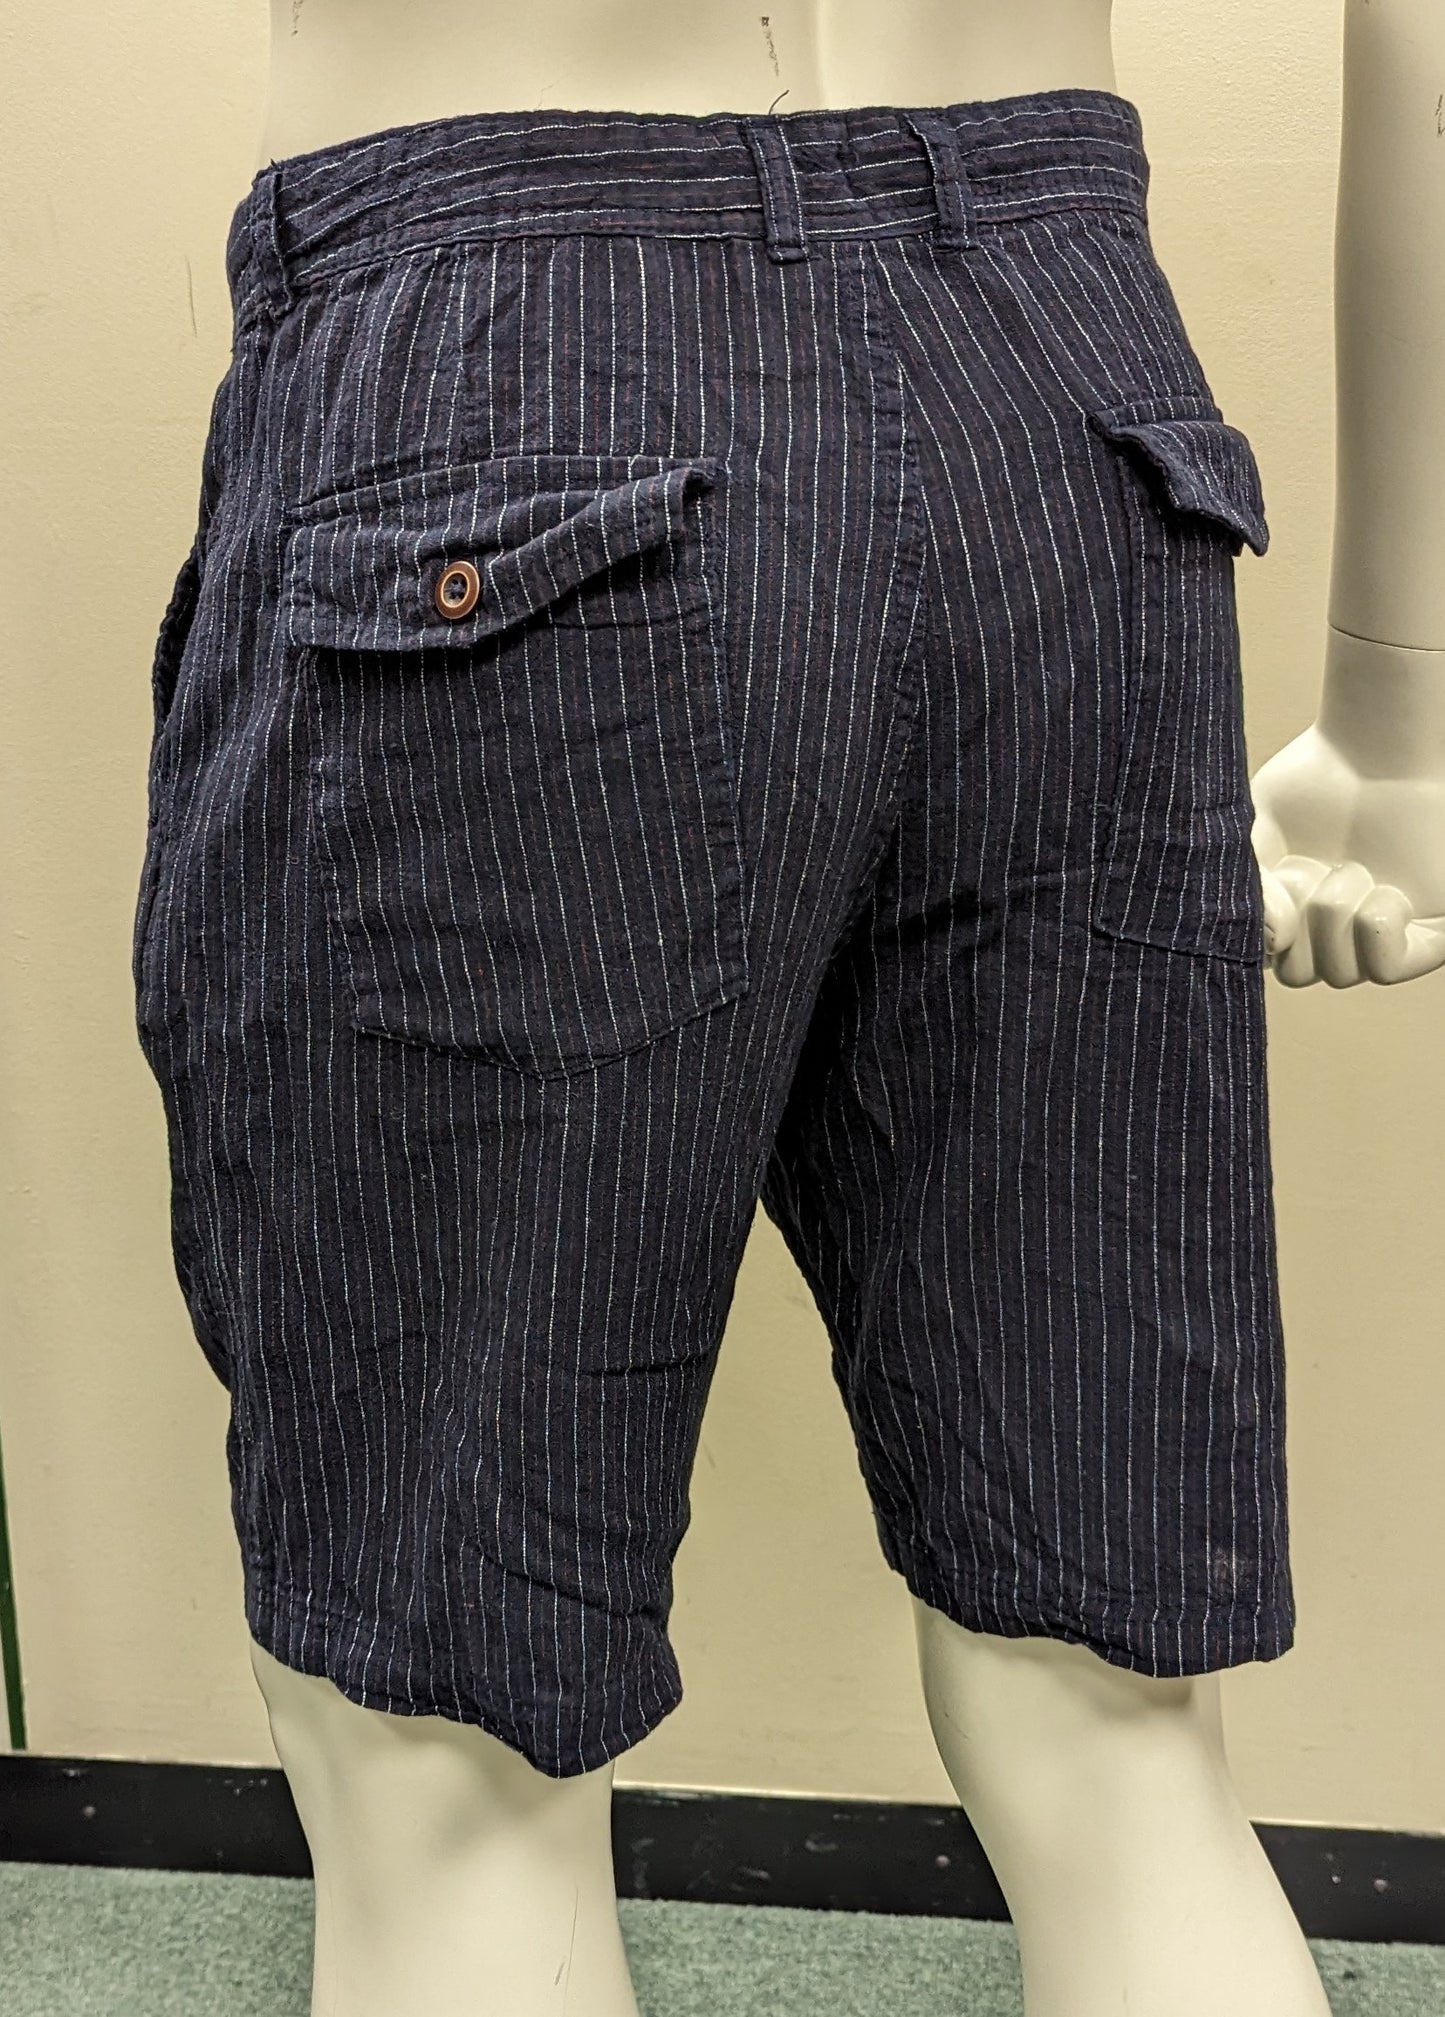 Men's Livergy Shorts - Size 28